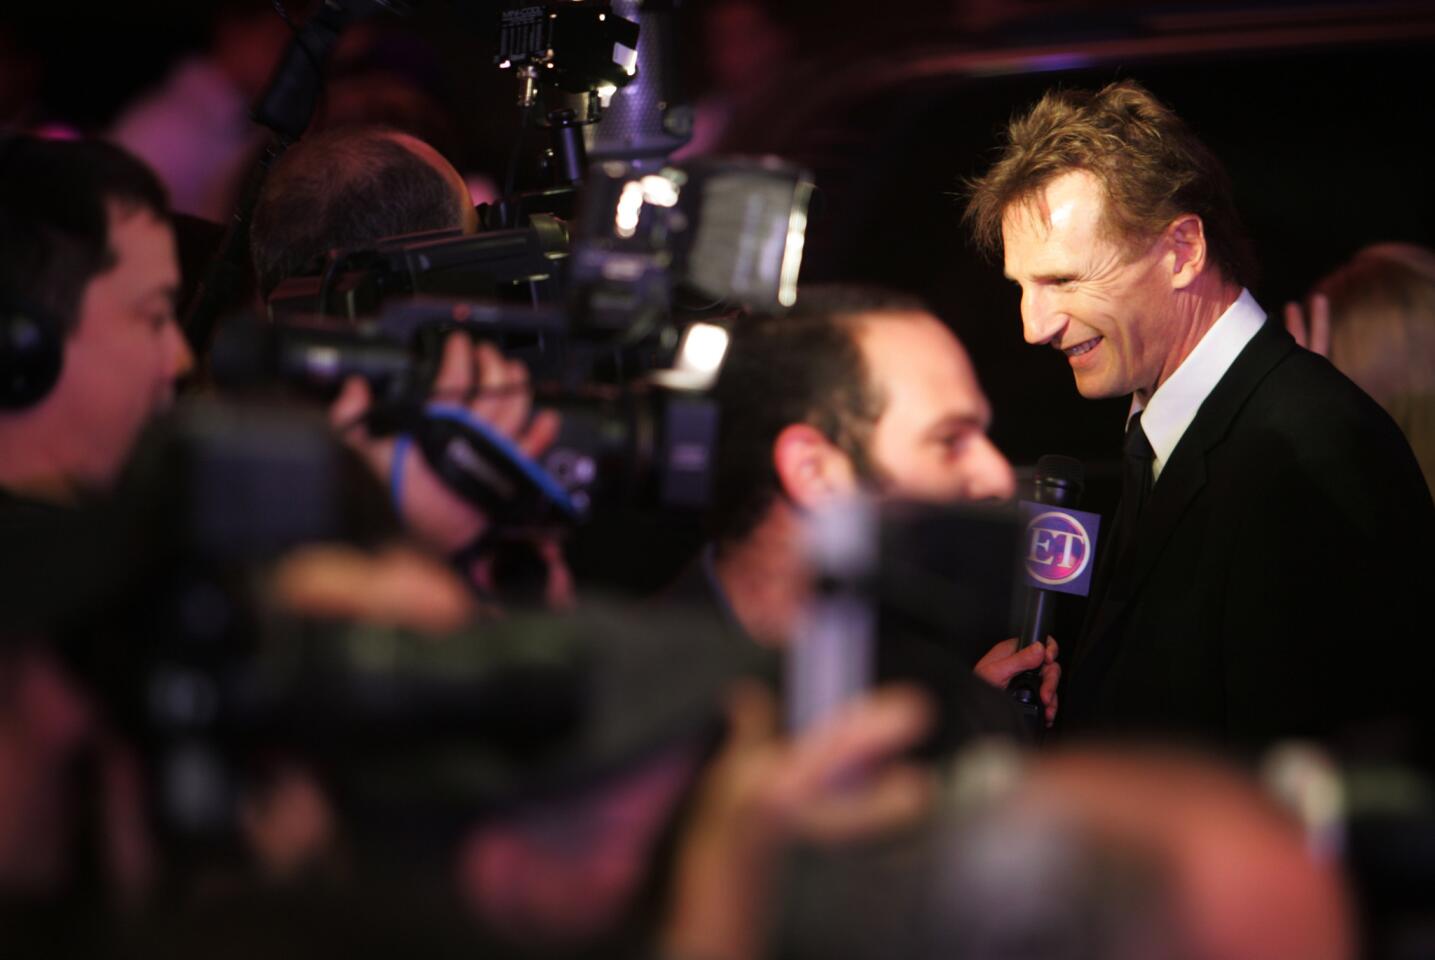 Liam Neeson | Oscars 2015 presenter